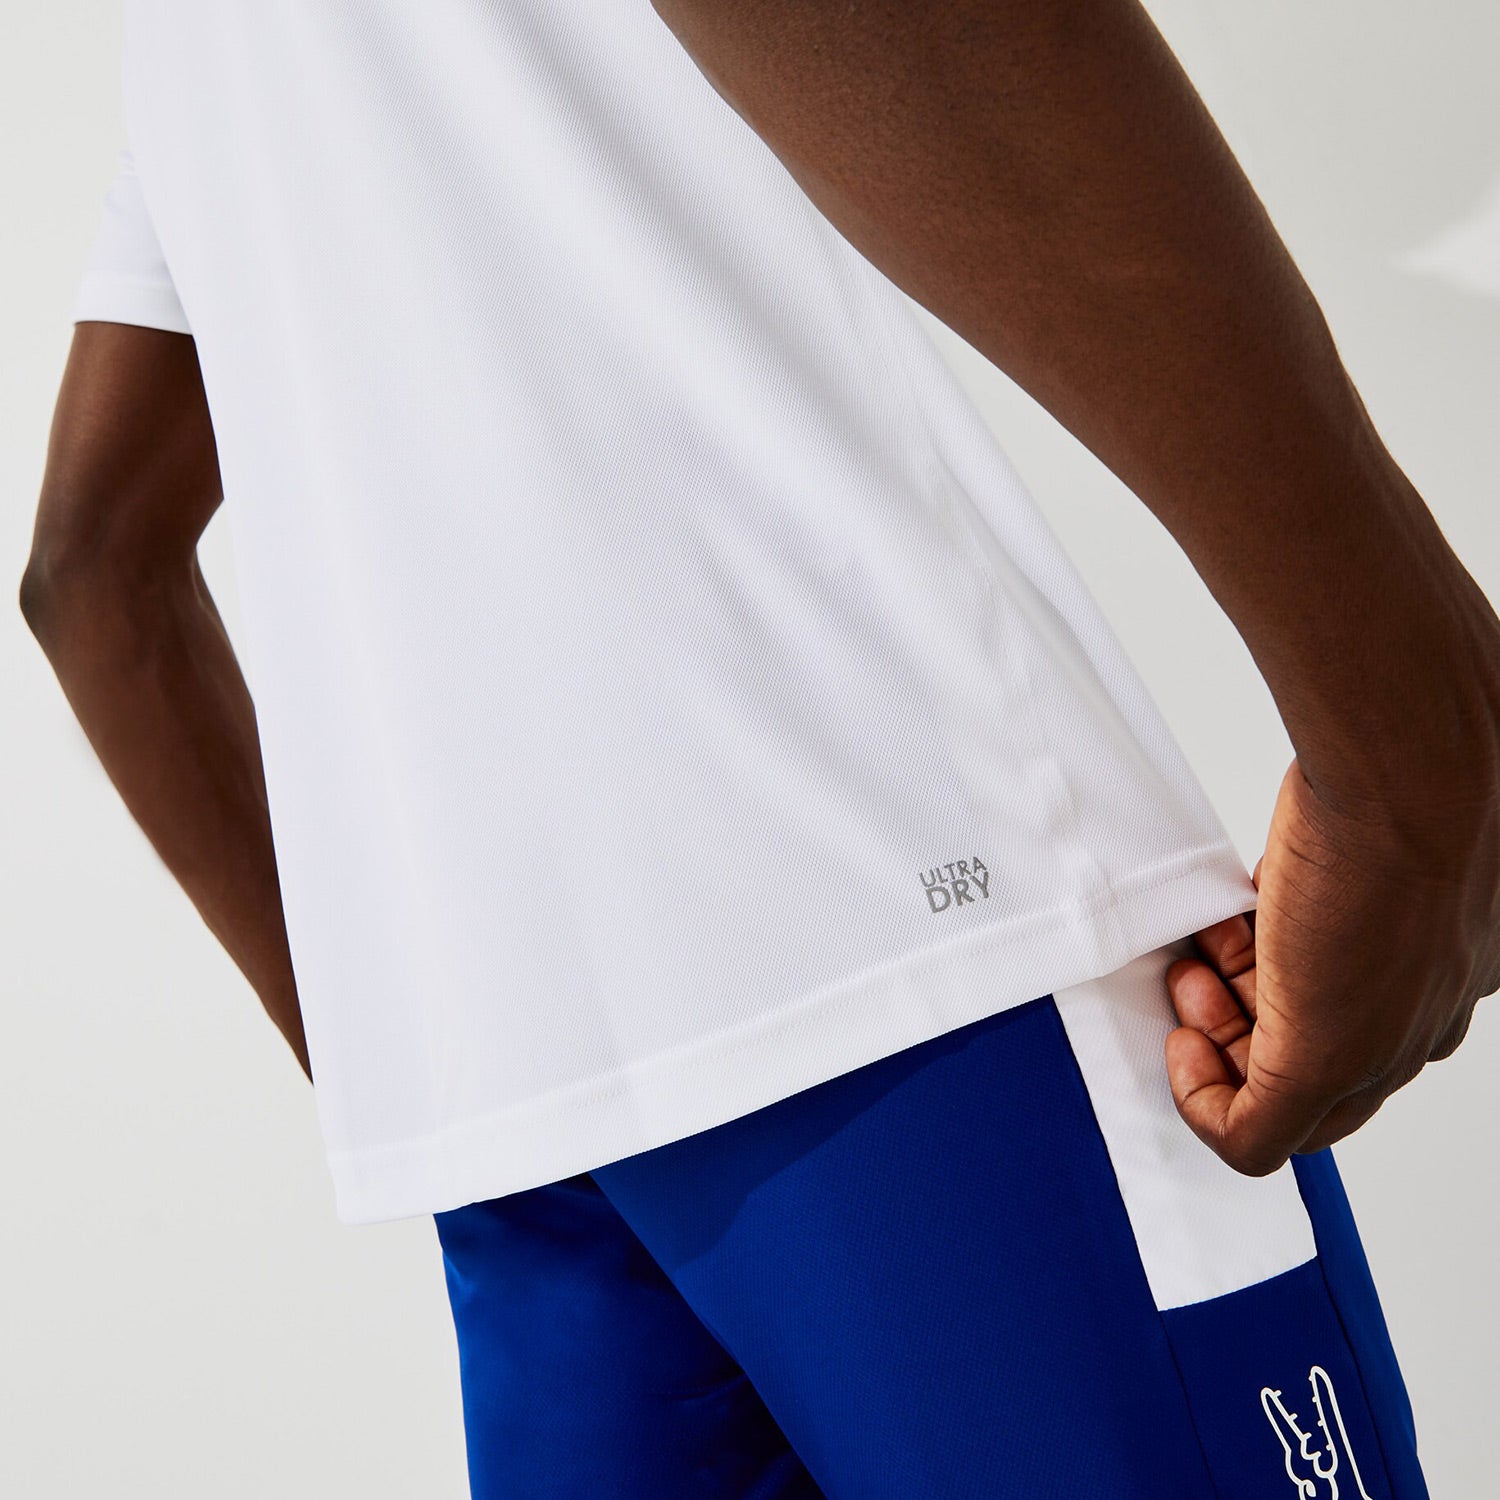 Lacoste Men's Ultra Dry Pique Tennis Shirt - White (4)